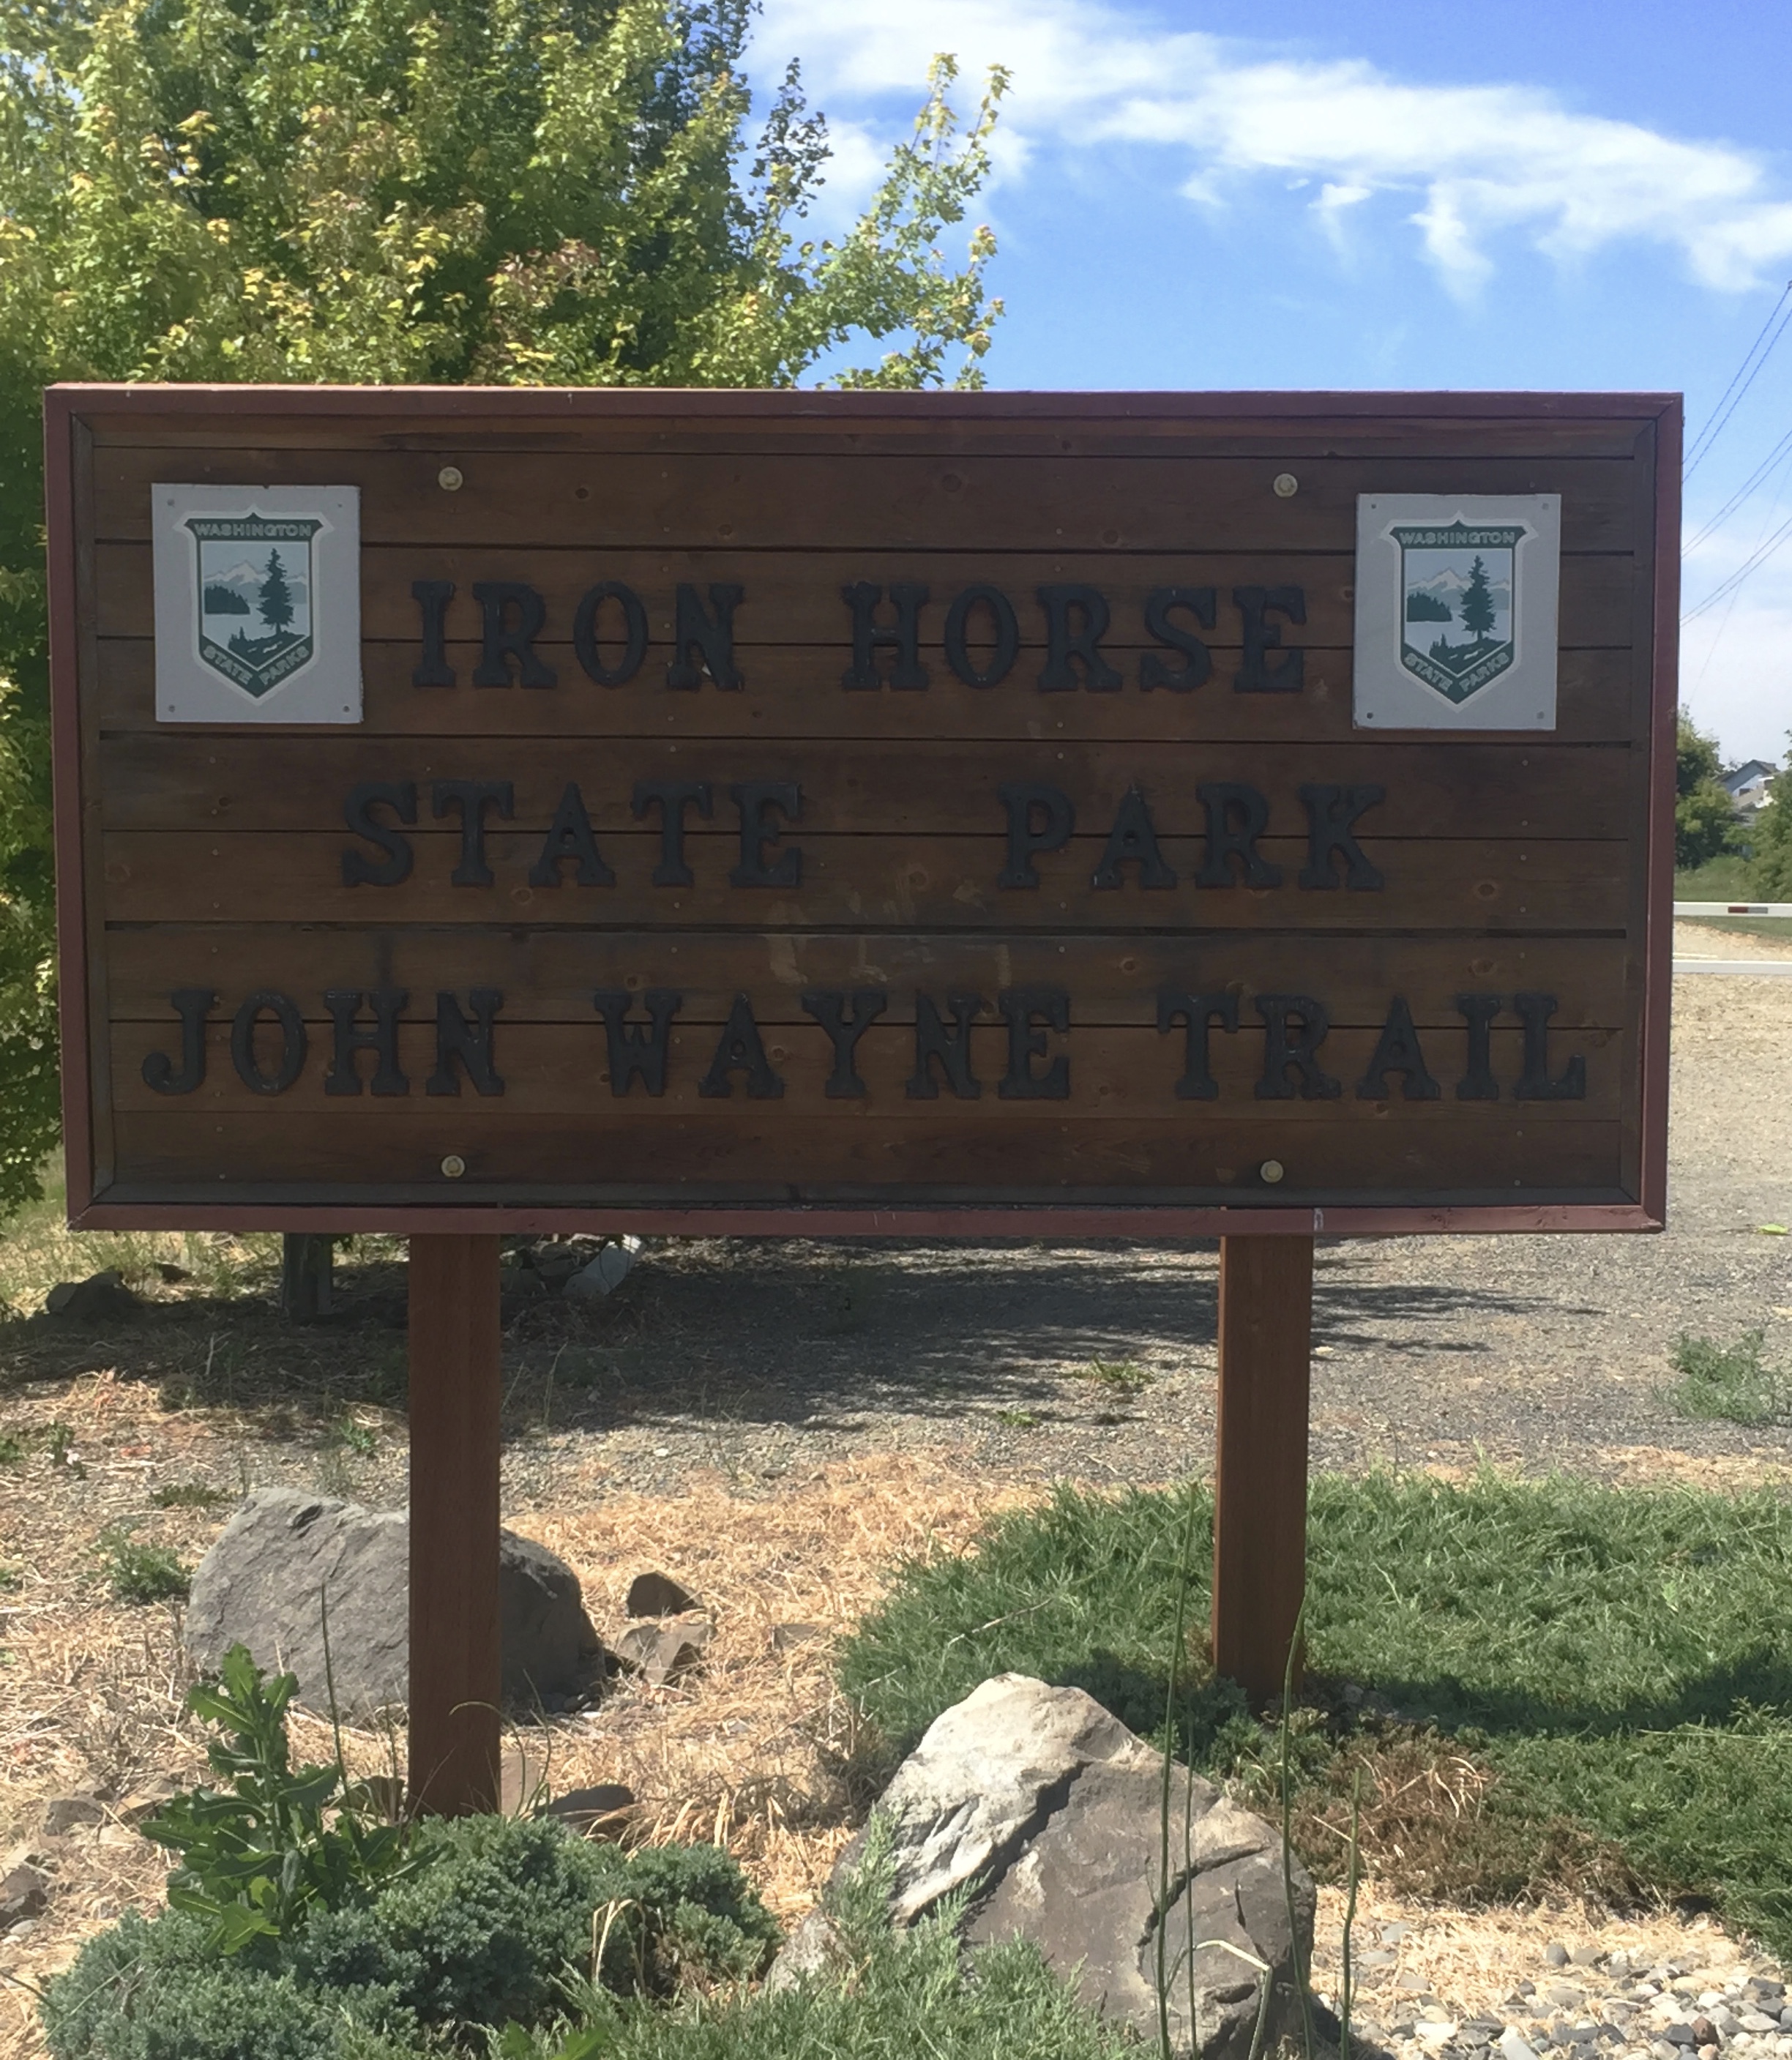 The John Wayne Trail through Iron Horse State Park